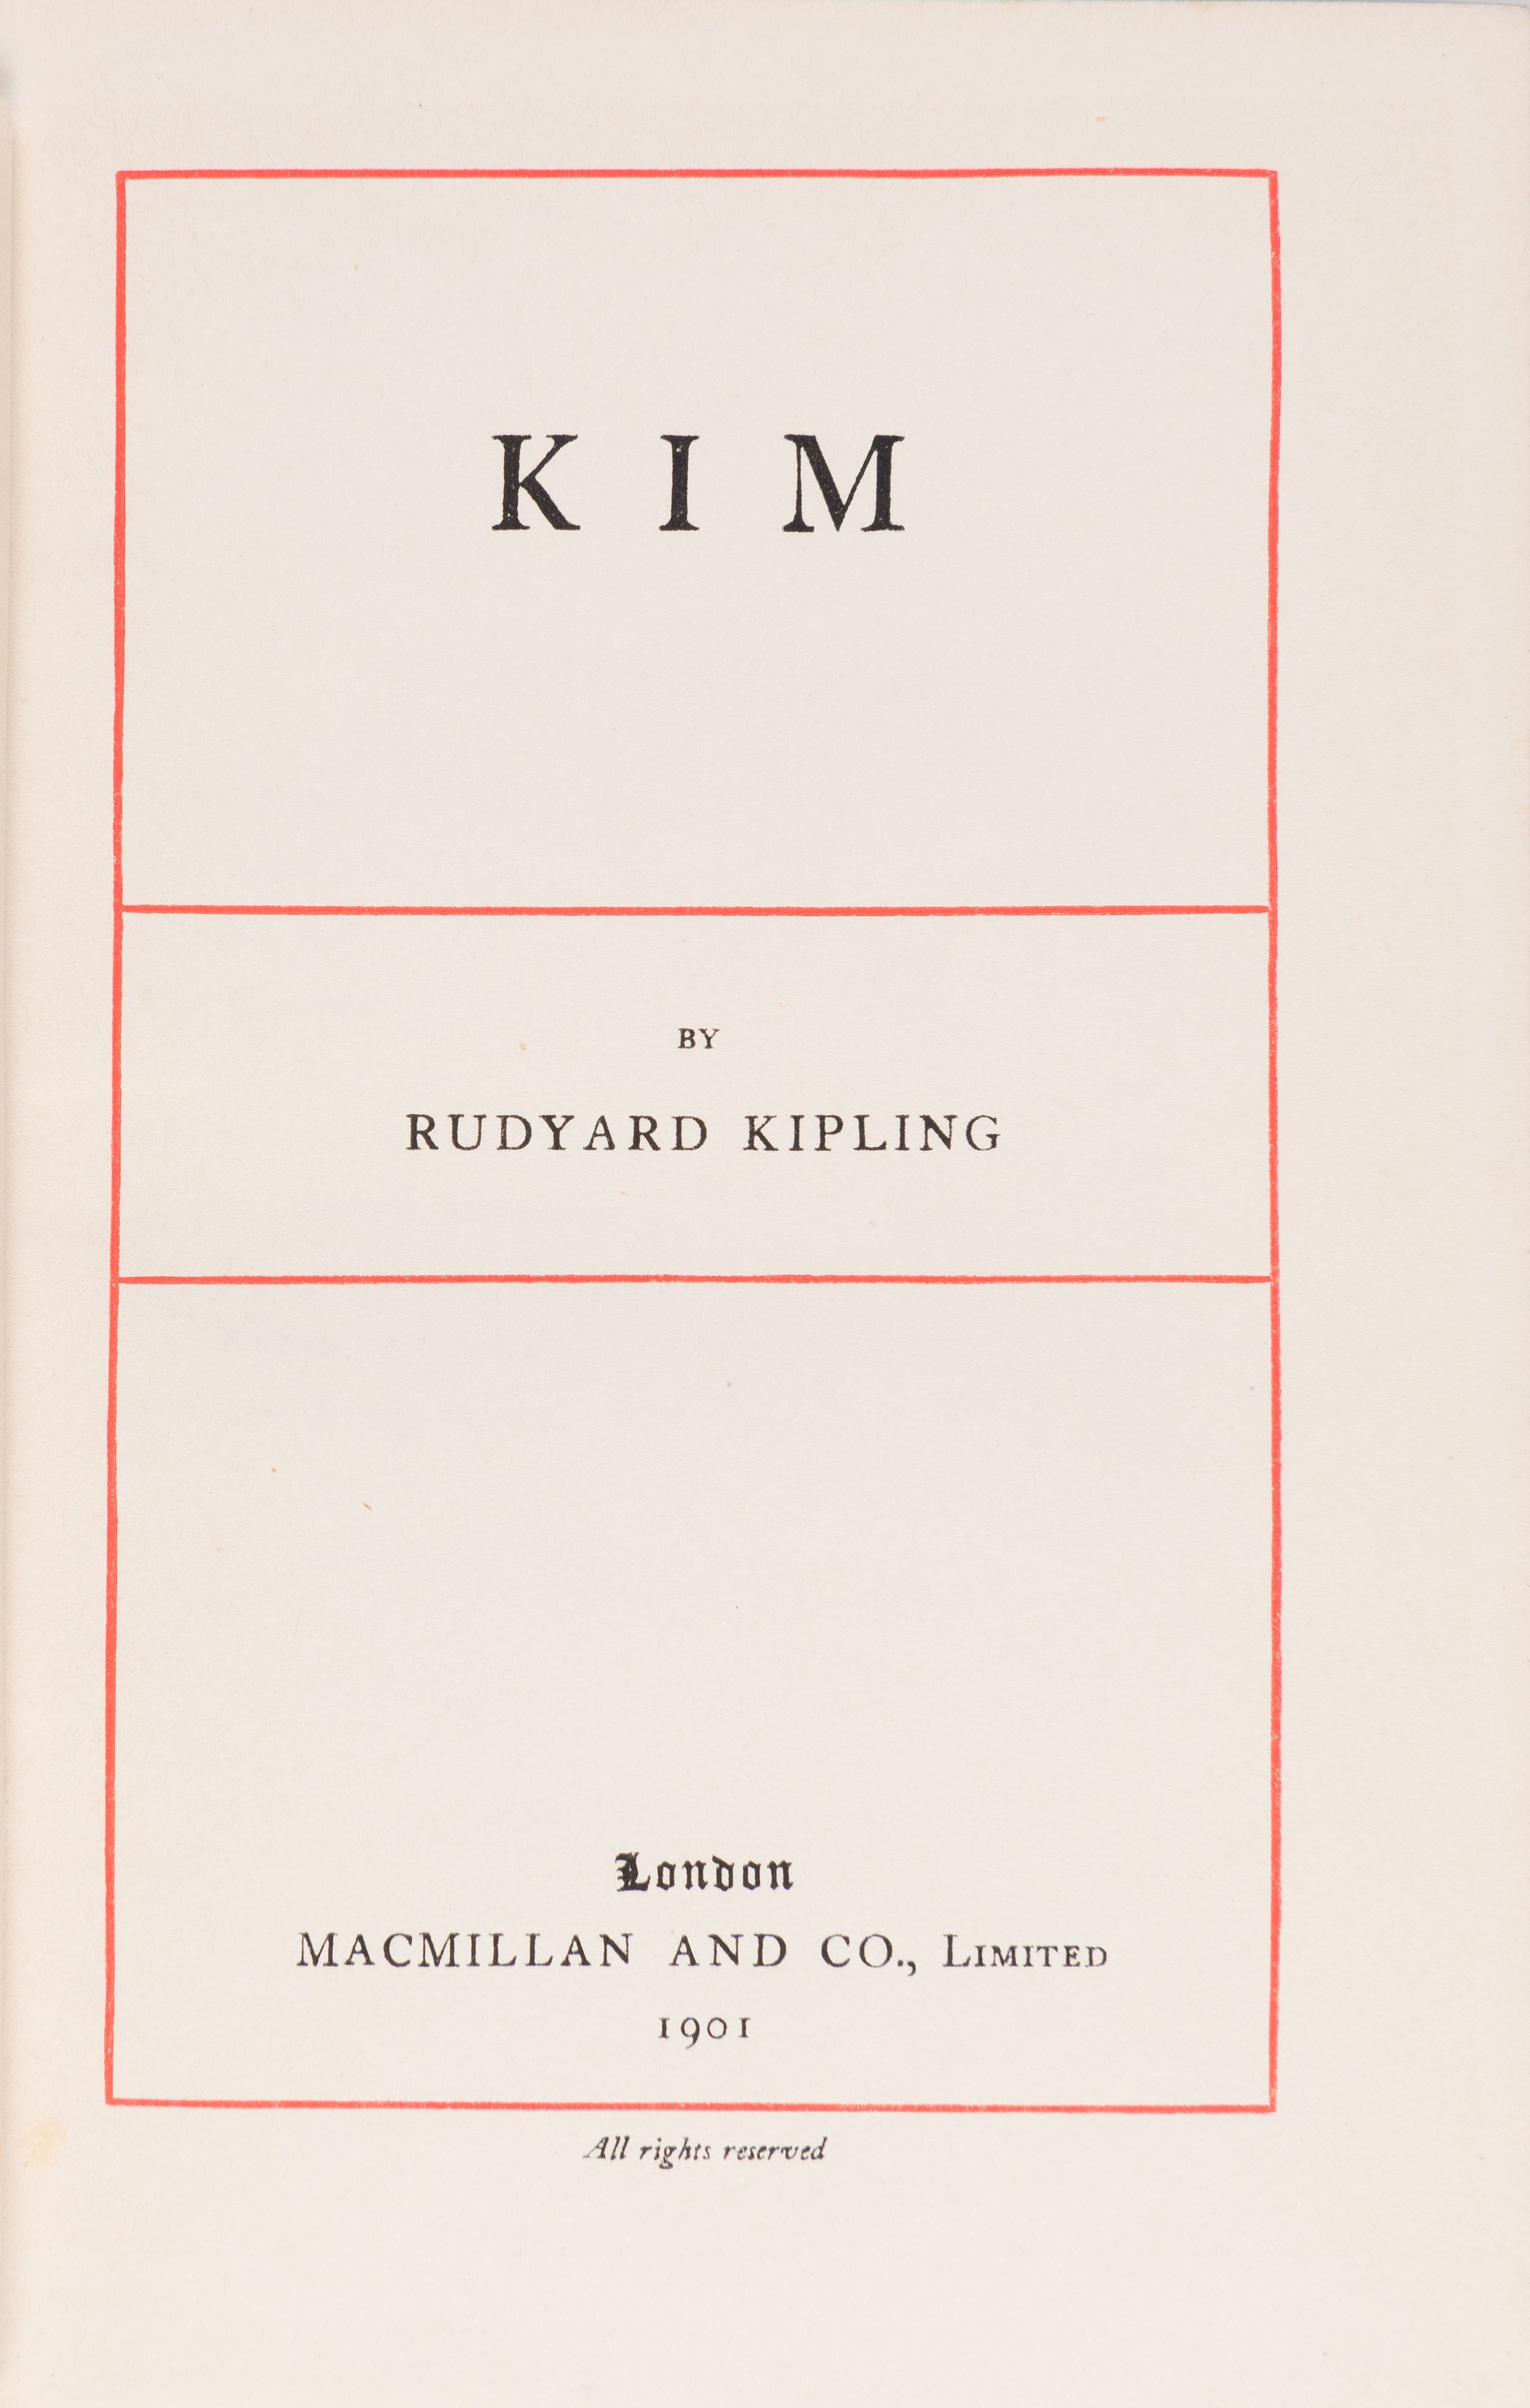 kipling book kim